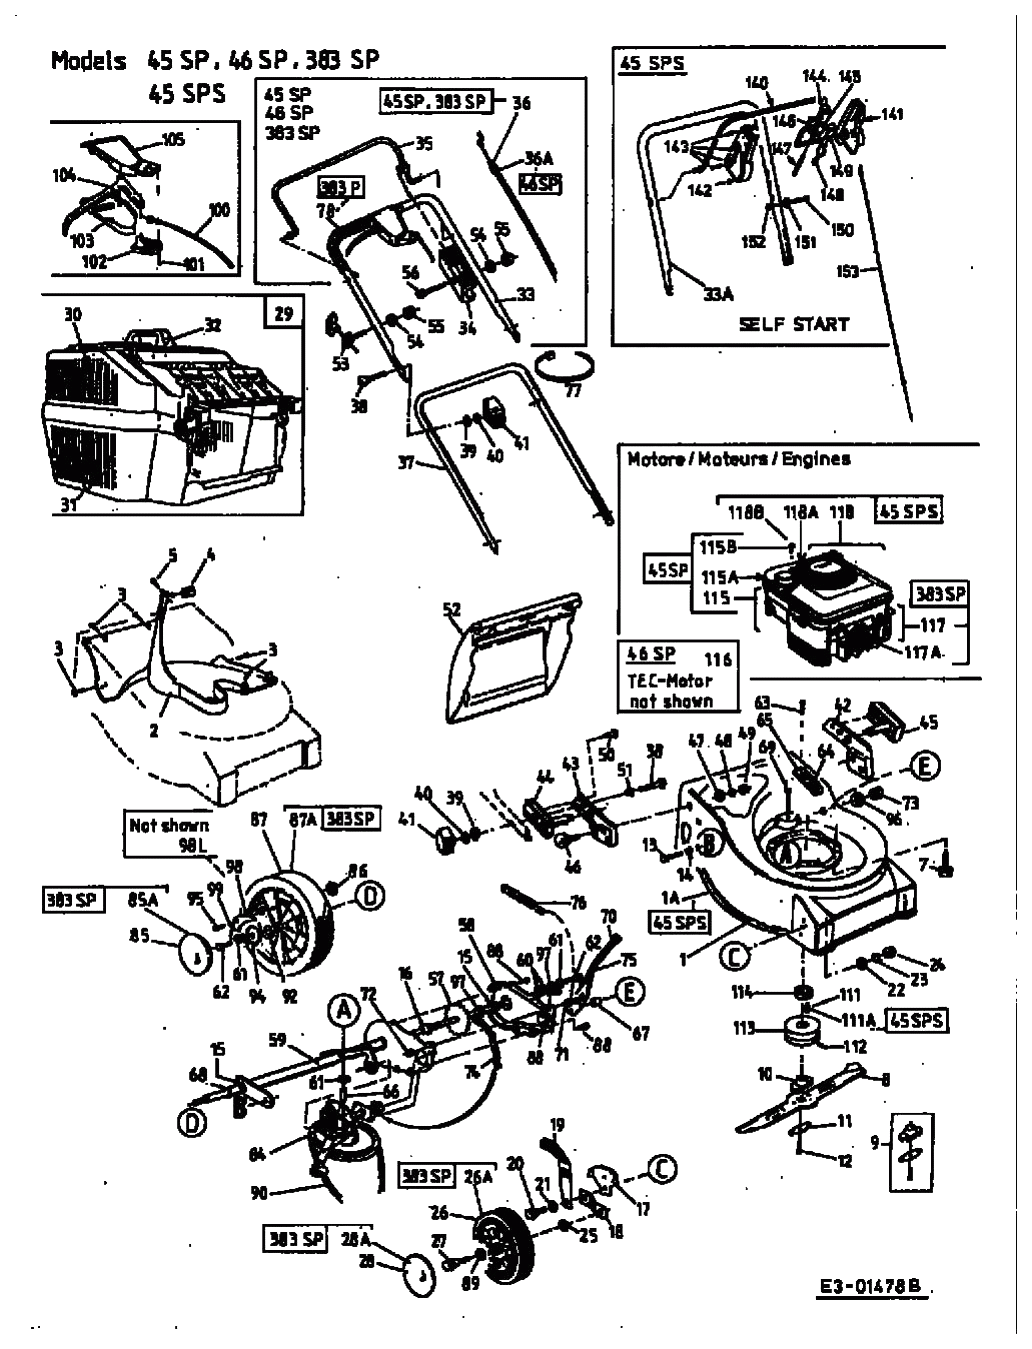 MTD Артикул 12C-604A678 (год выпуска 2001). Основная деталировка